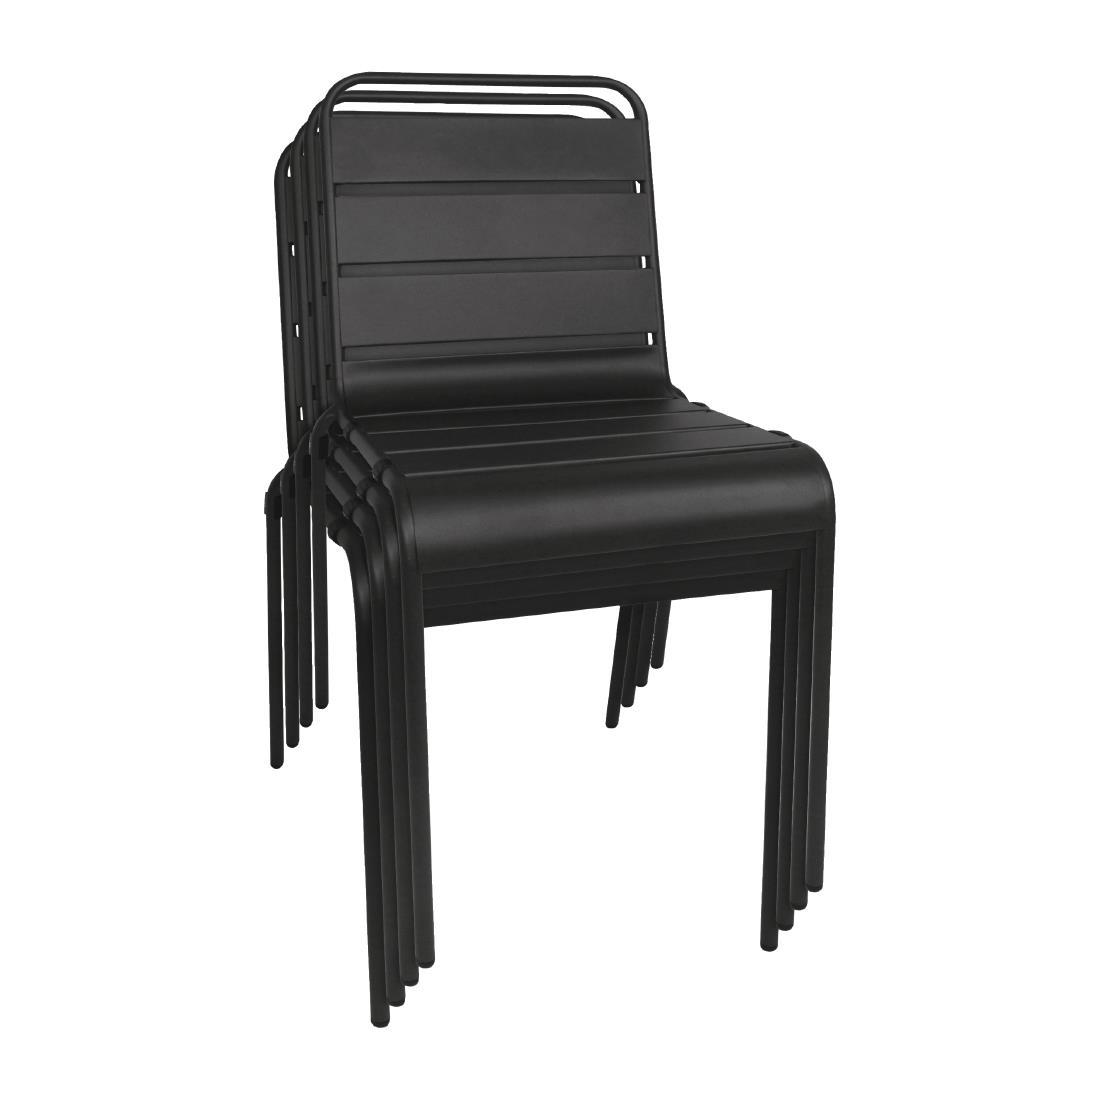 Bolero Black Slatted Steel Side Chairs (Pack of 4) - CS728  - 4